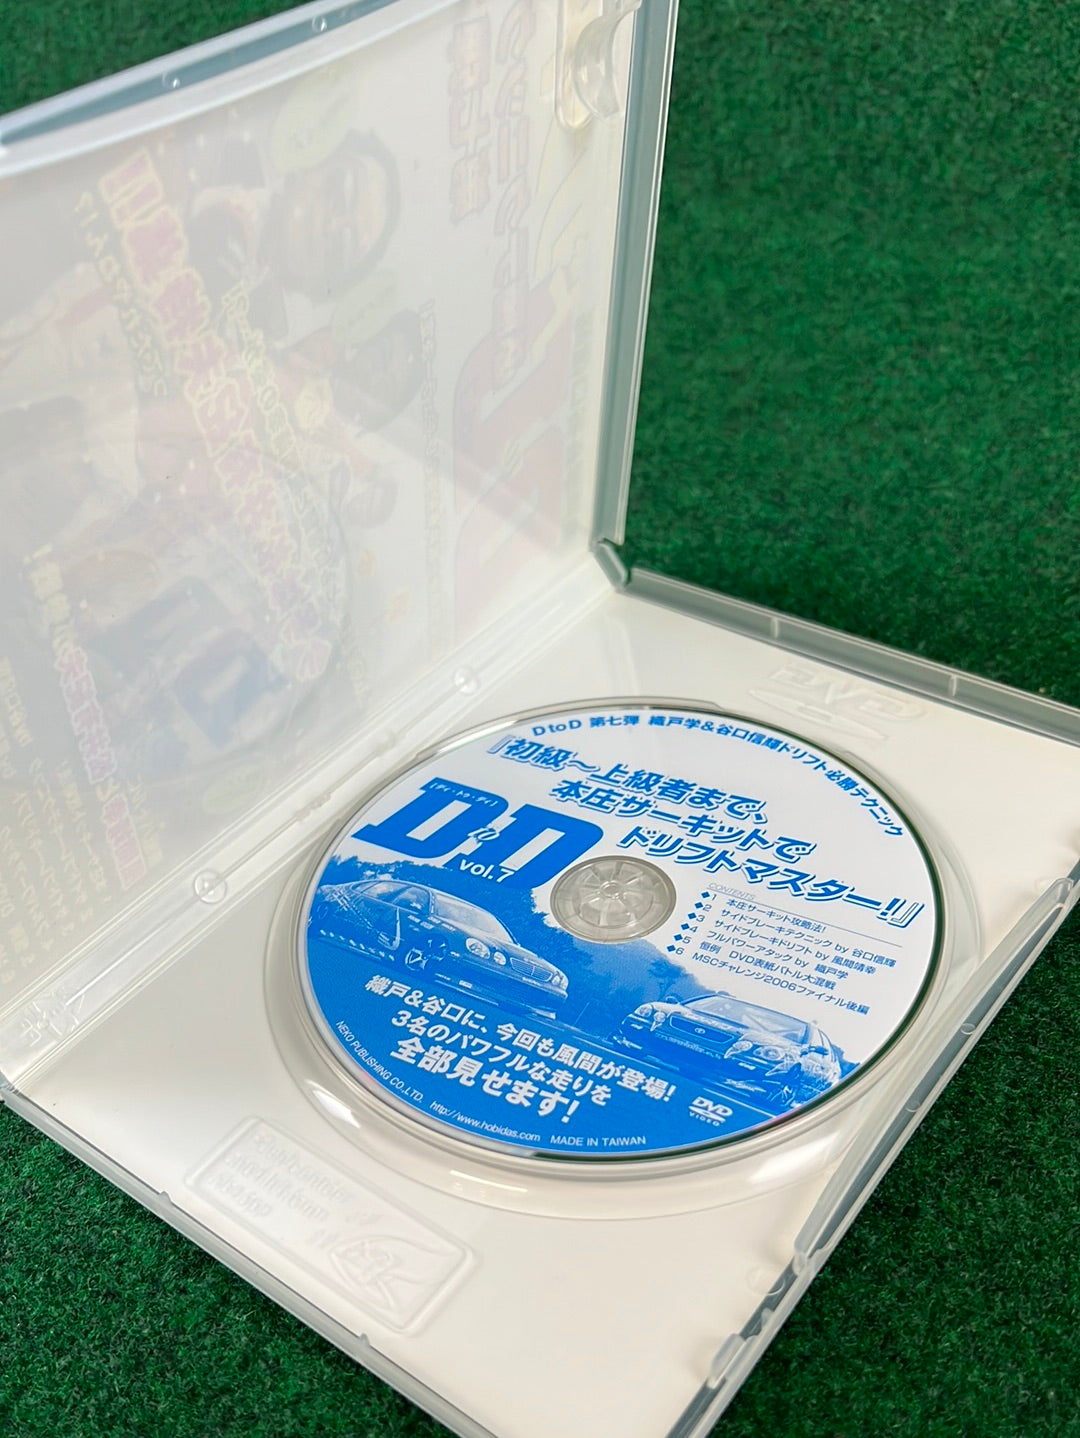 D to D - Manabu Orido & Nobuteru Taniguchi Vol. 7 DVD